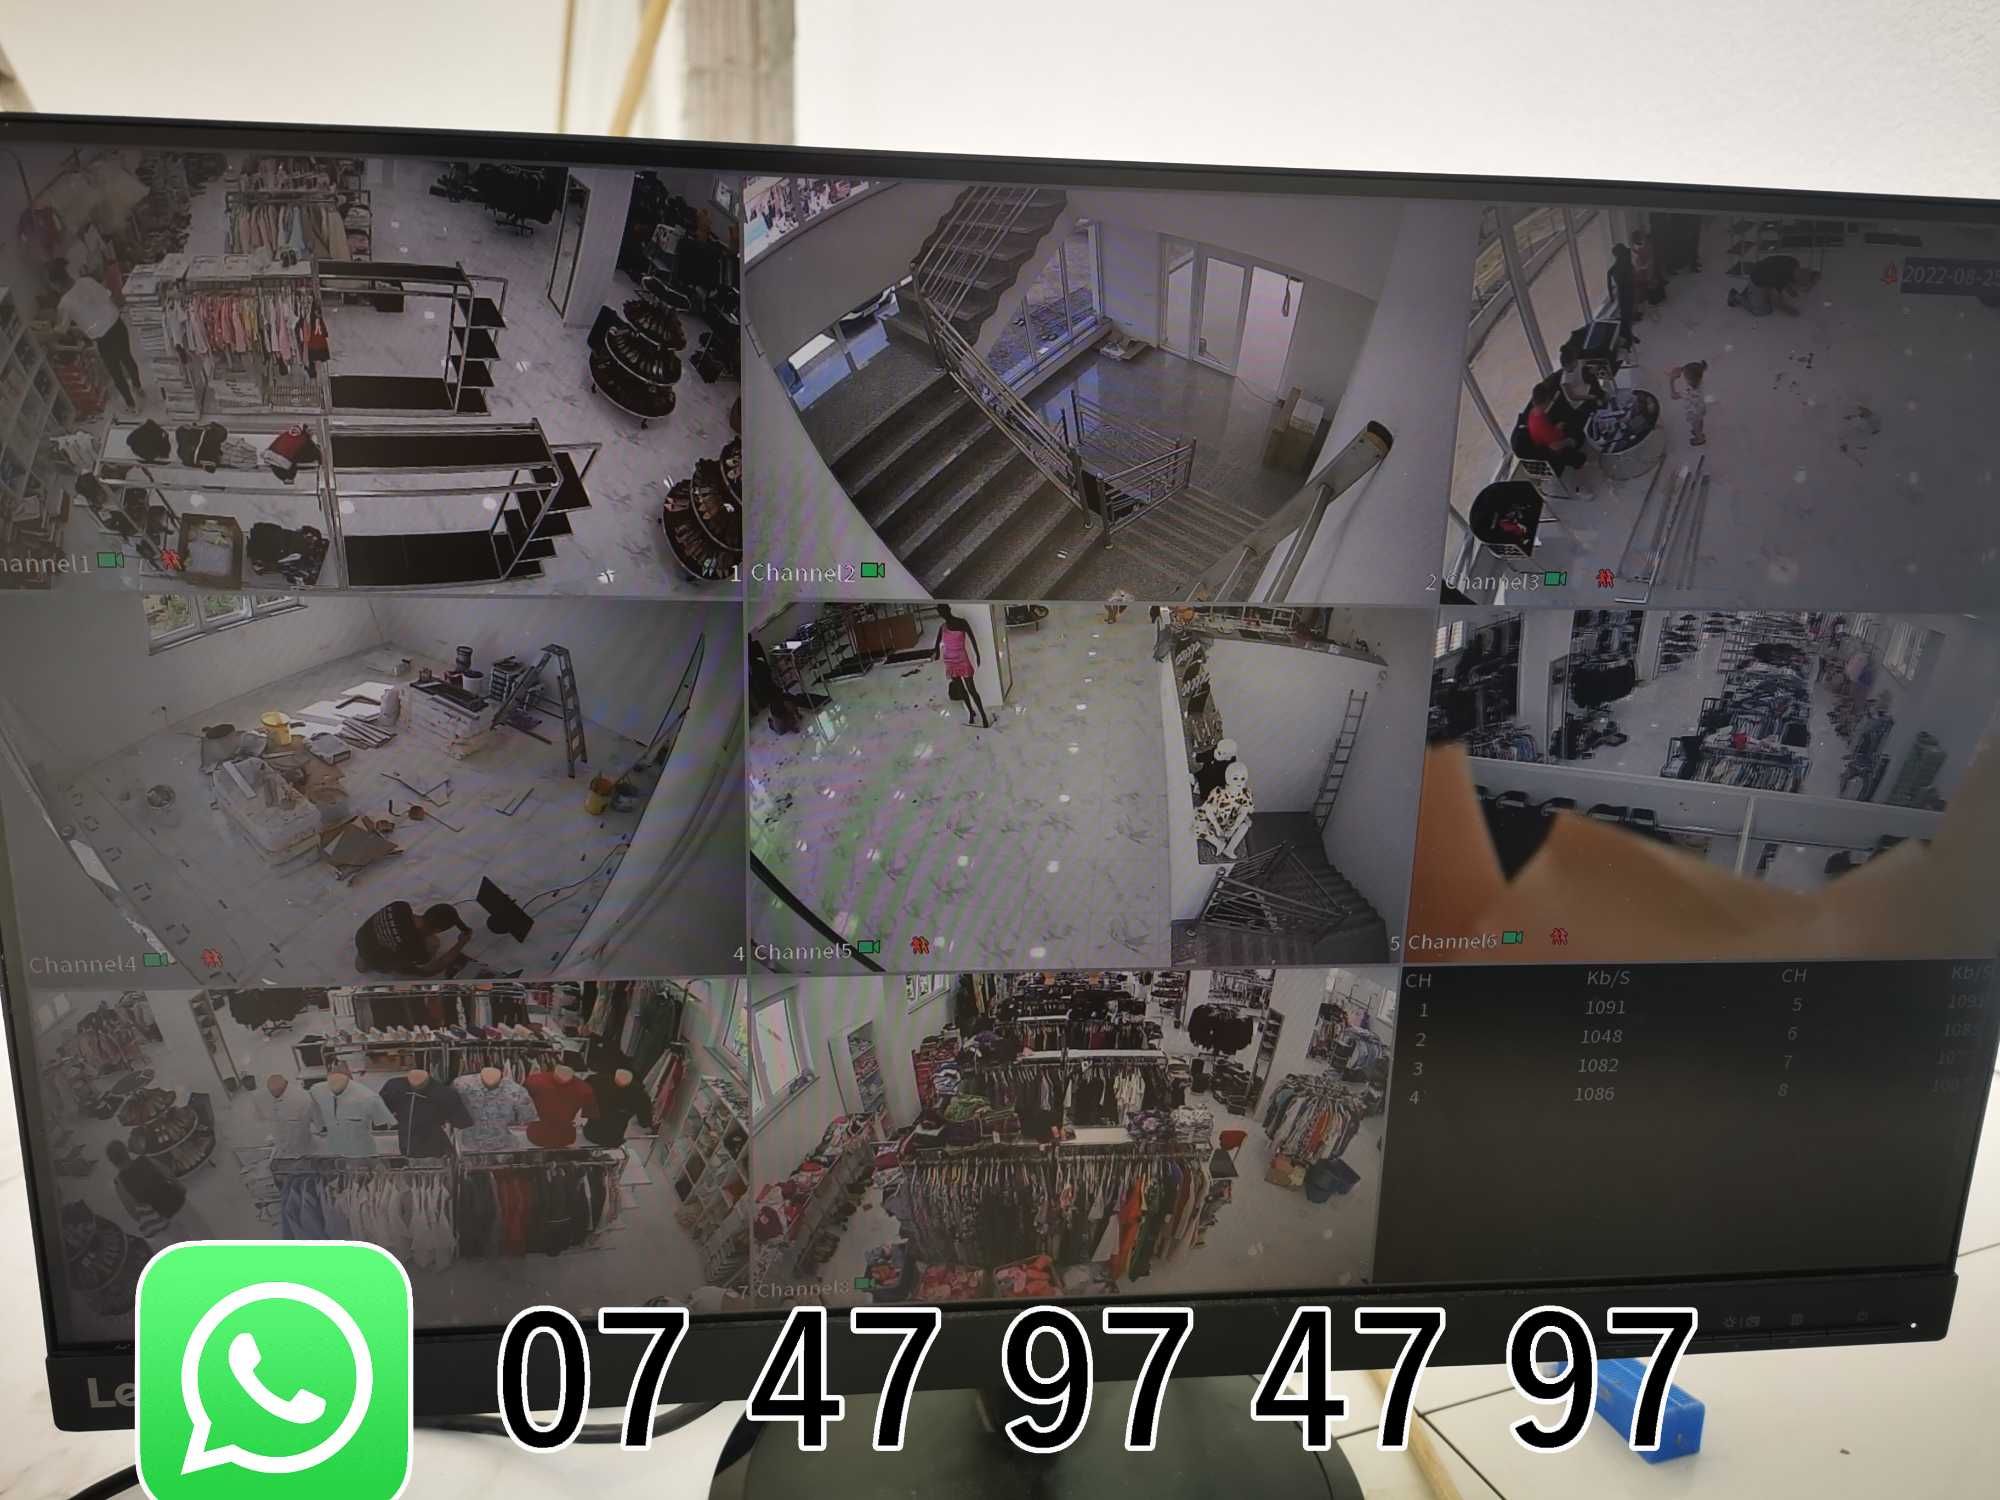 sistem 4 8 camere video supraveghere filmat cu instalare in Baia Mare